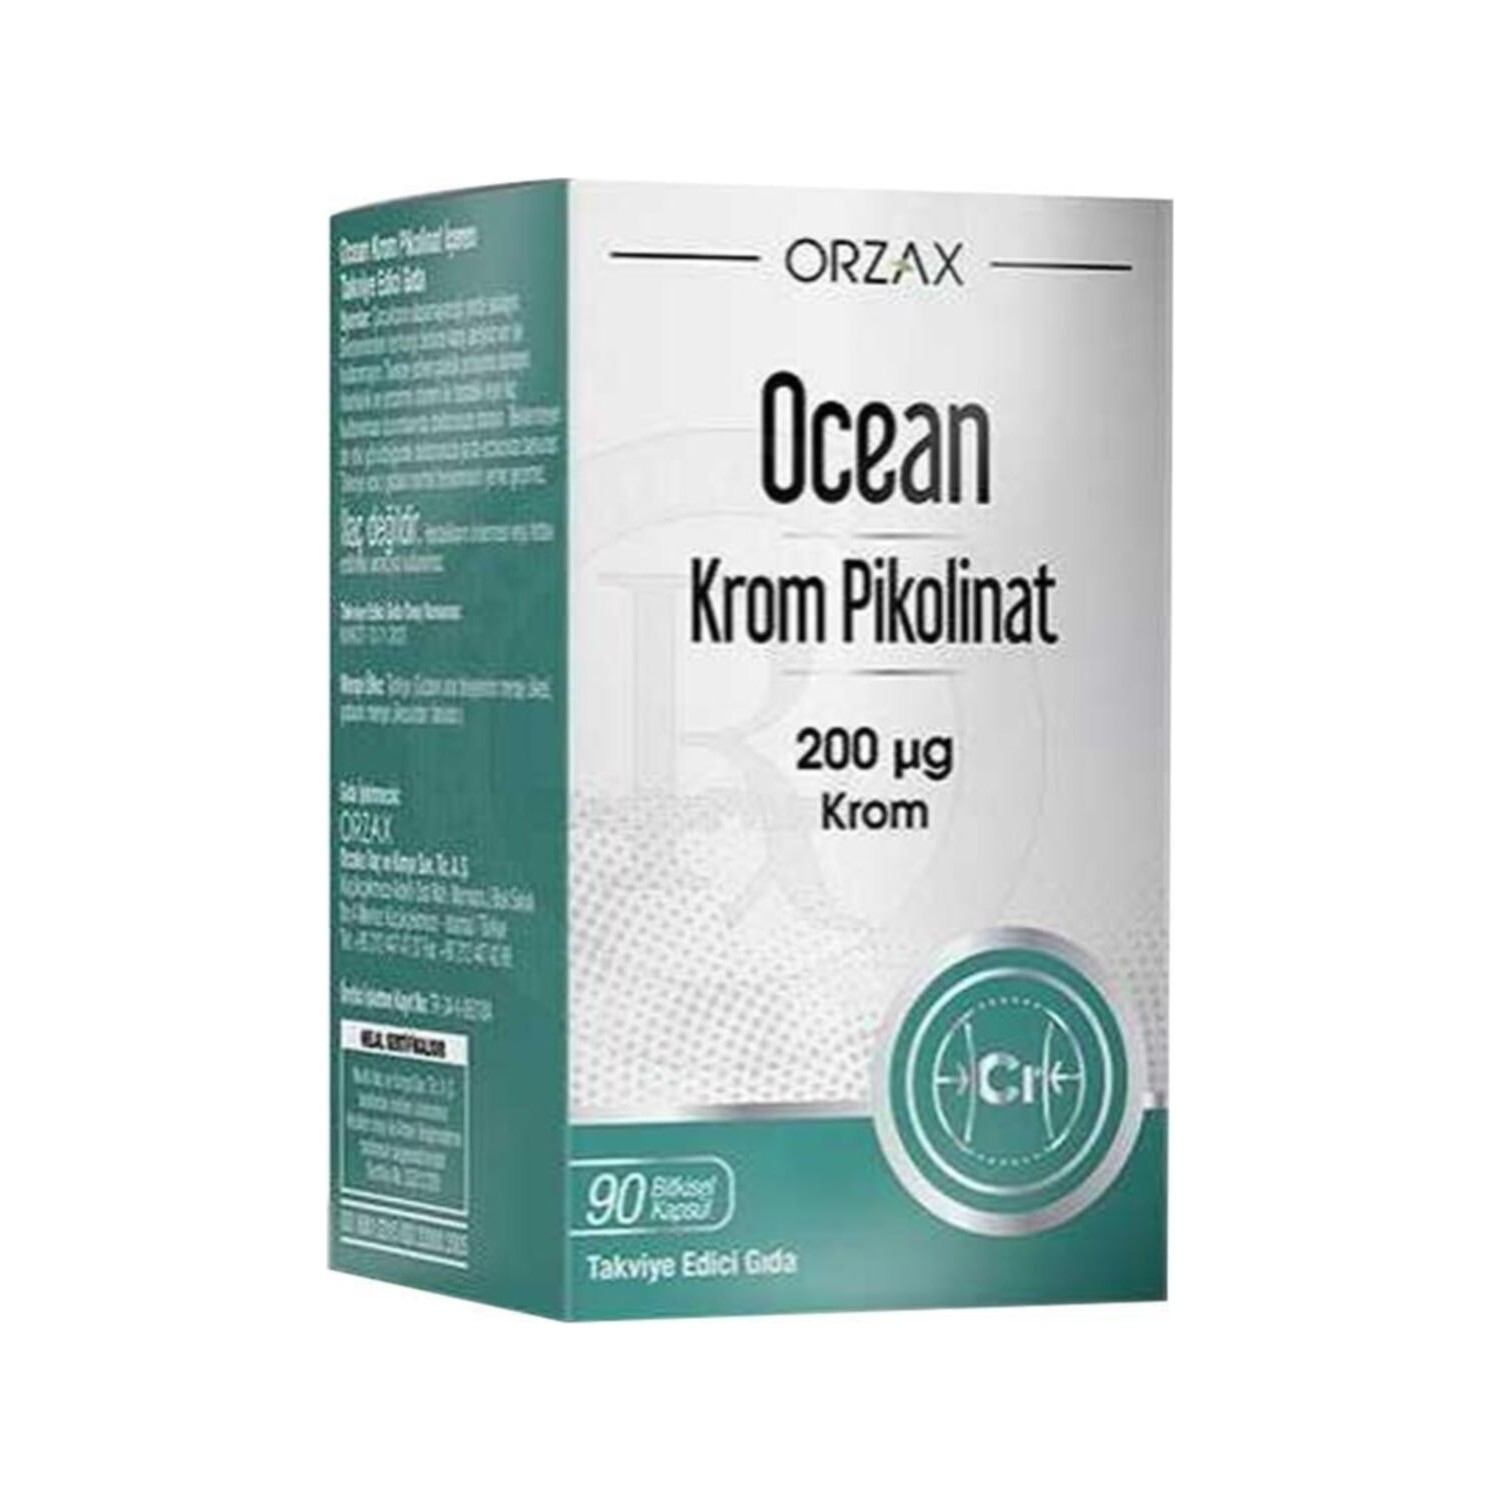 Пиколинат хрома Ocean, 90 травяных капсул atech nutrition premium chrome picolinate